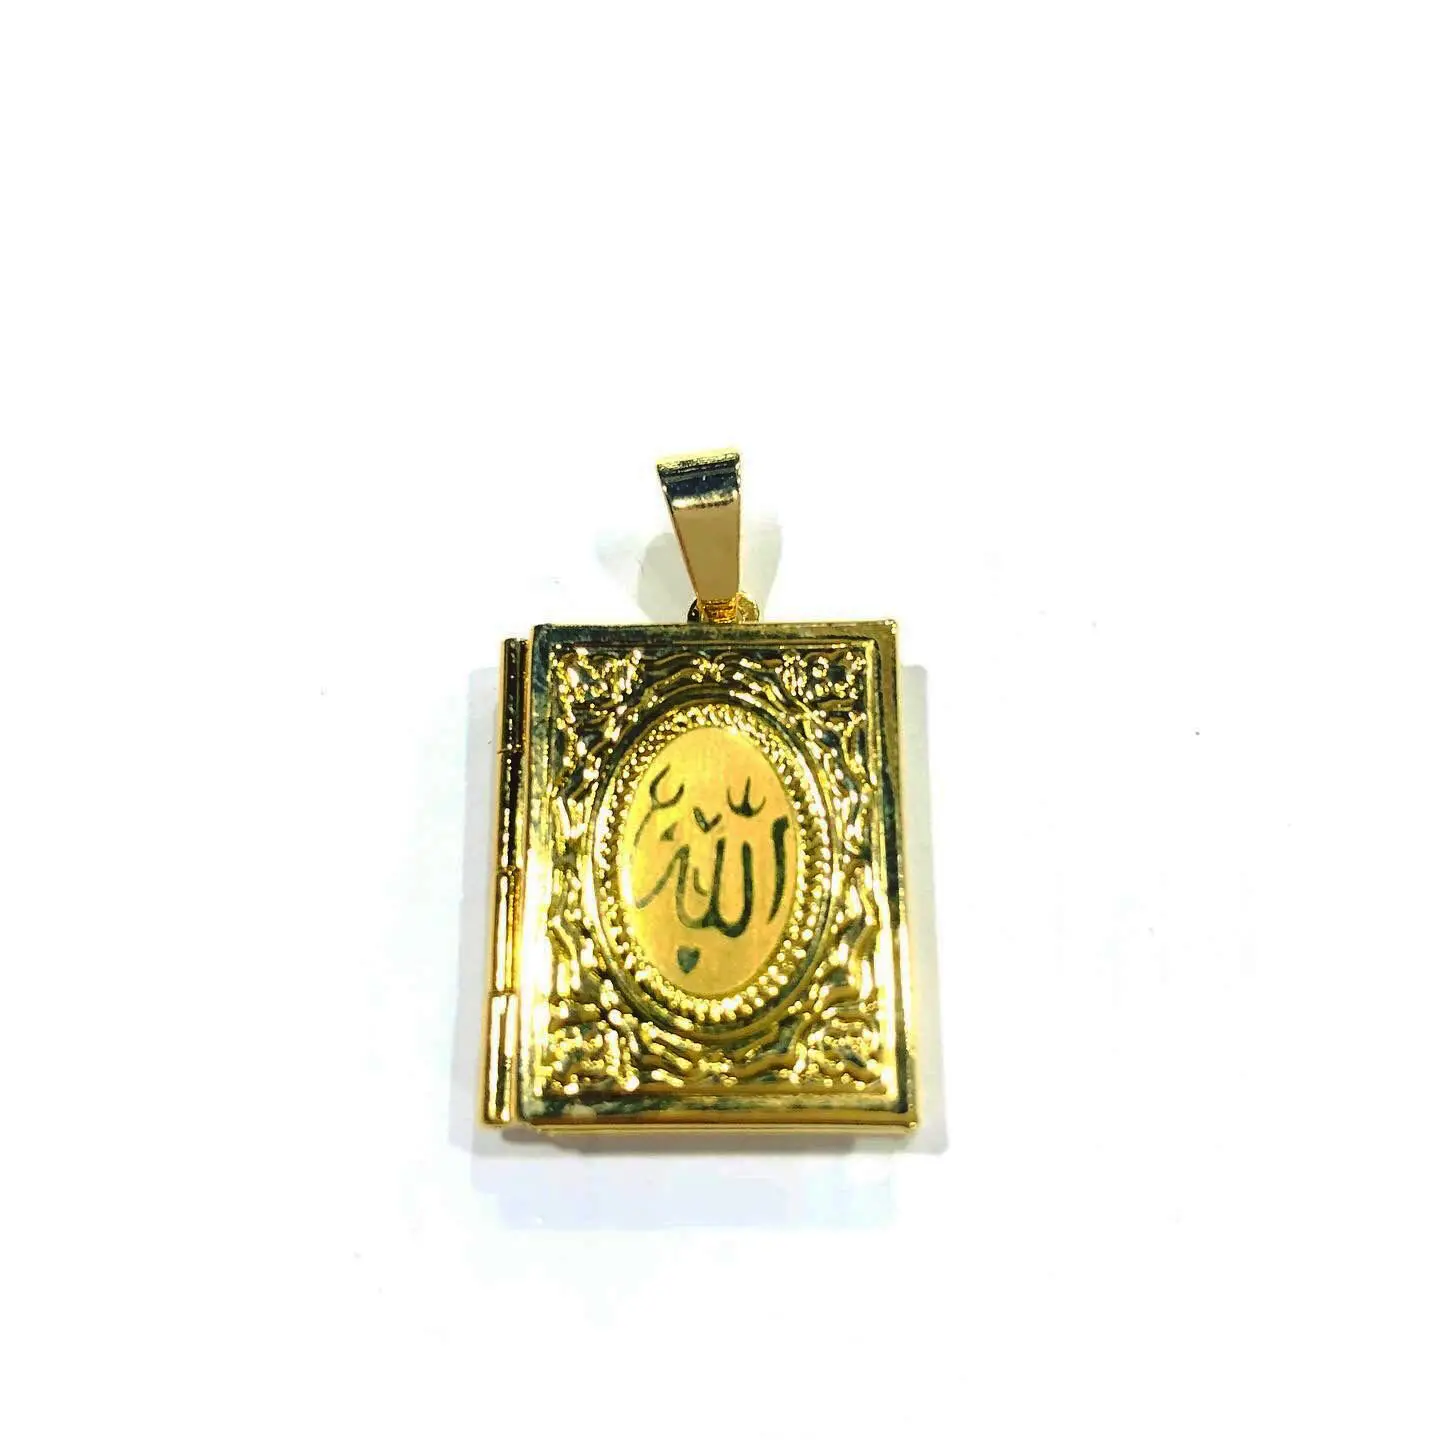 BMZ New arrival allah pendant for photo puting Islam 3*2cm allah pendant gold plated